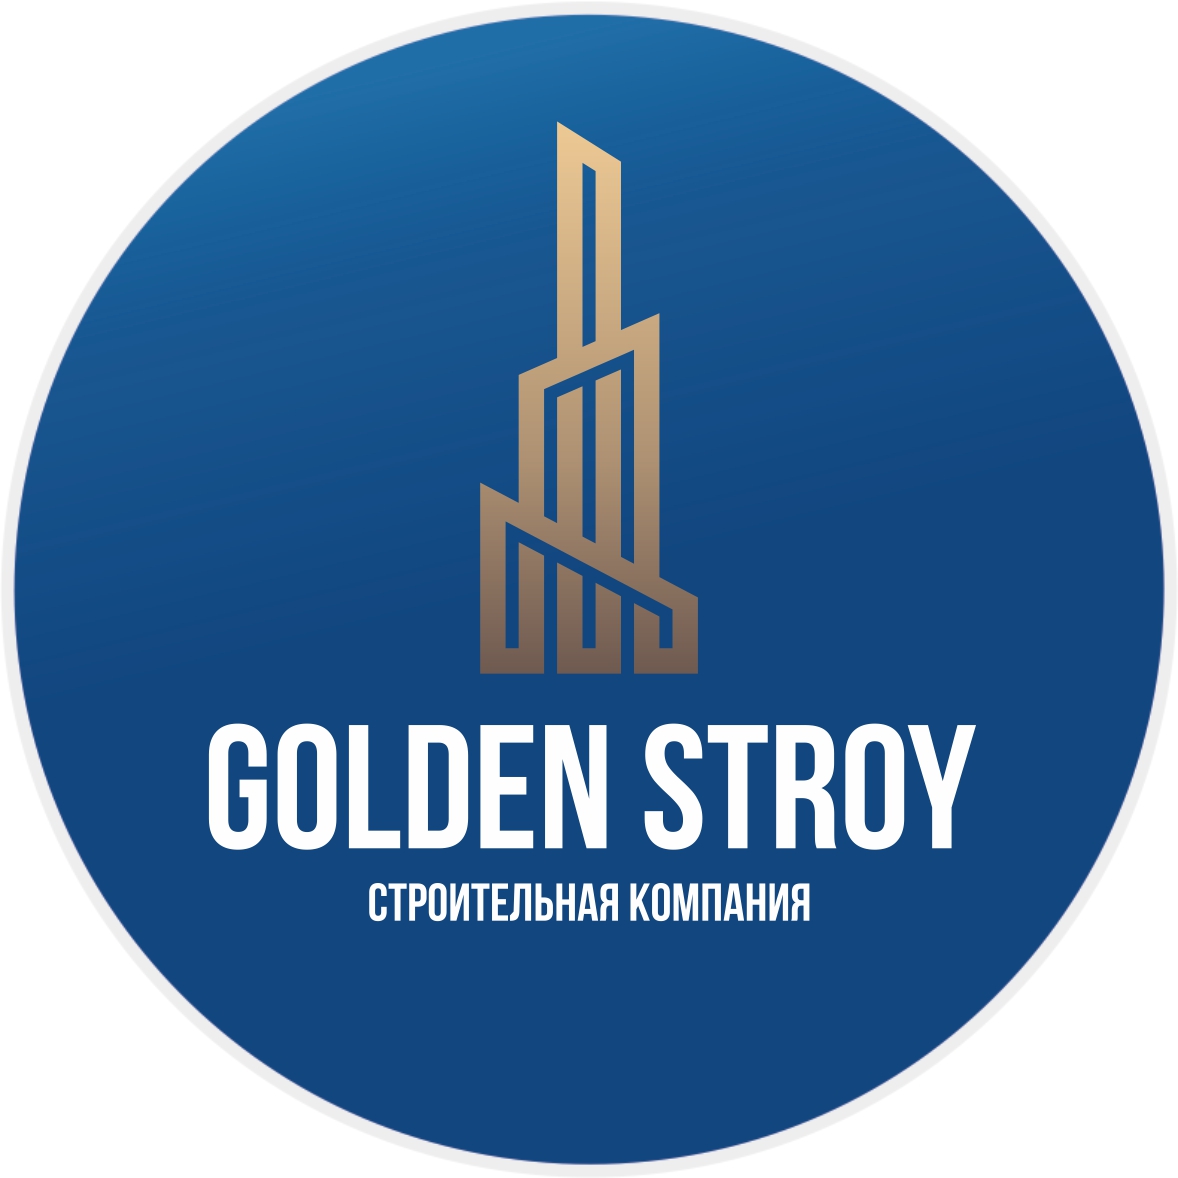 Golden Stroy